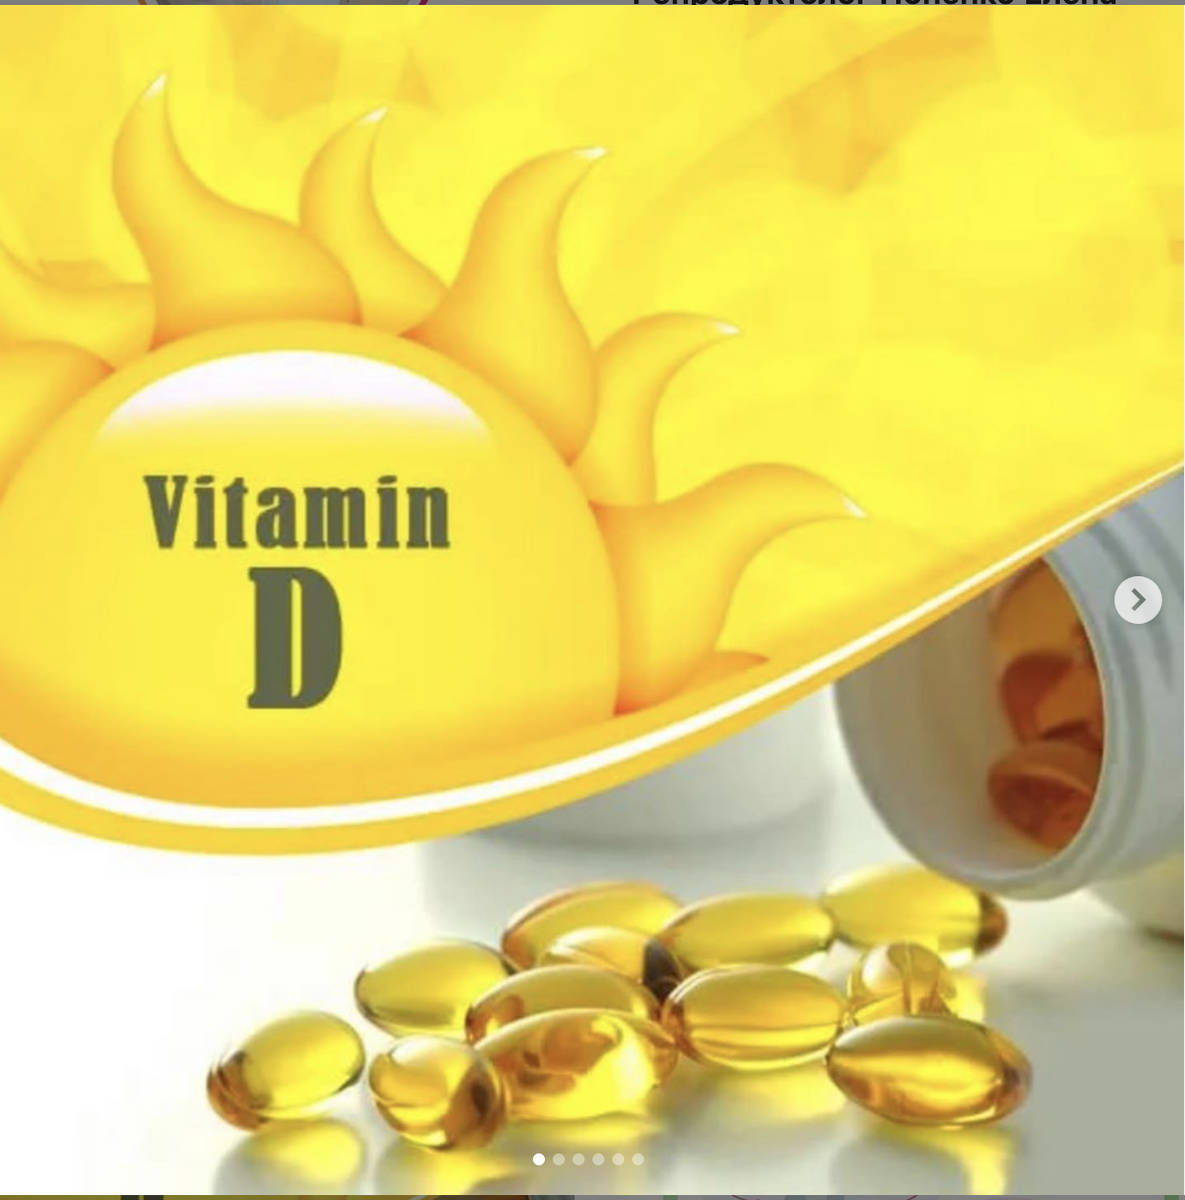 Sun vitamin. Витамин д. Витамин д солнце. Витамин д Солнечный витамин. Витамин d витамины.